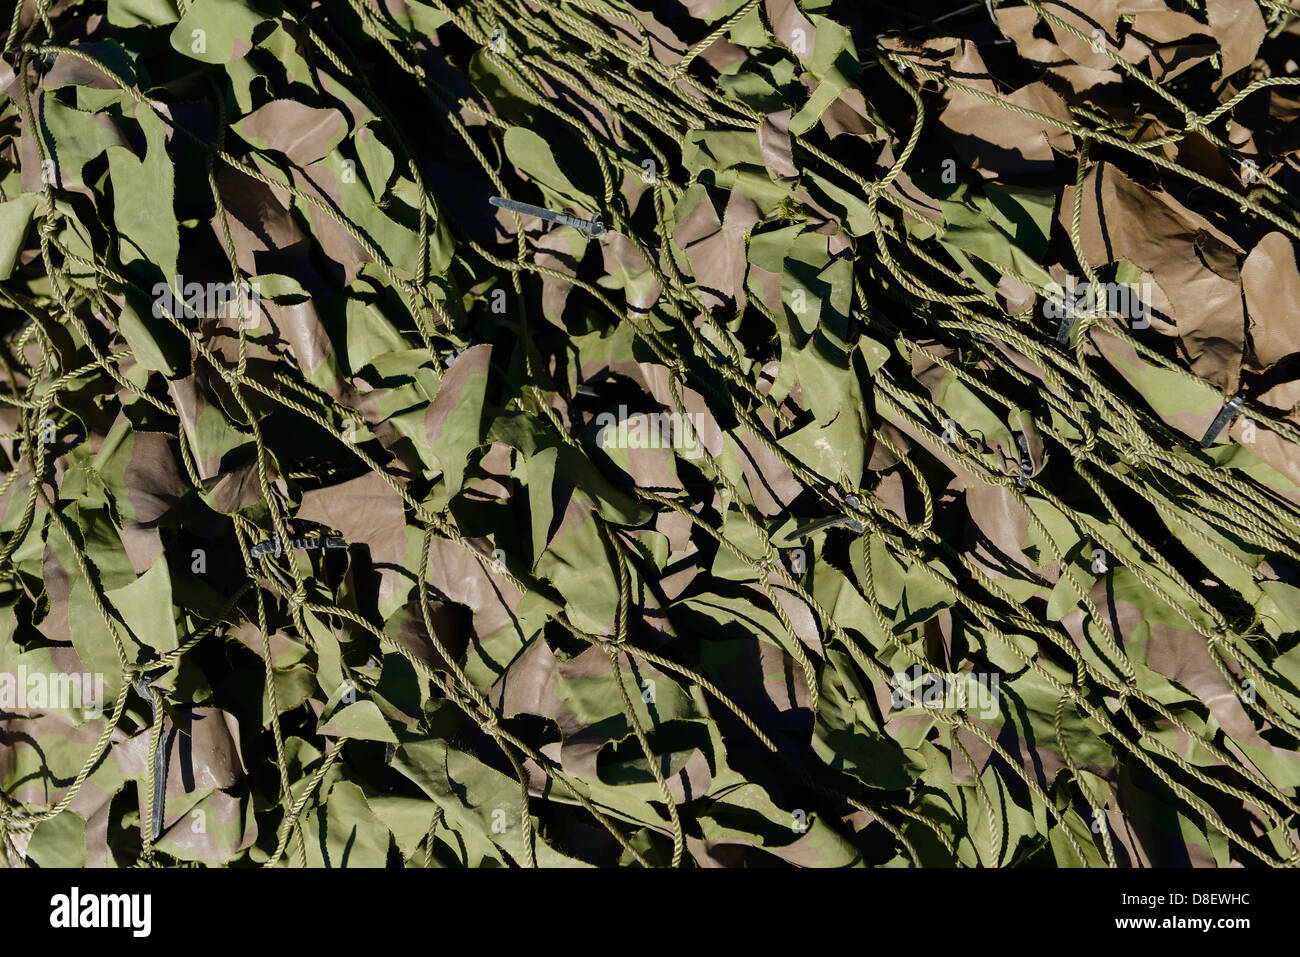 Army camouflage netting dettaglio Foto Stock